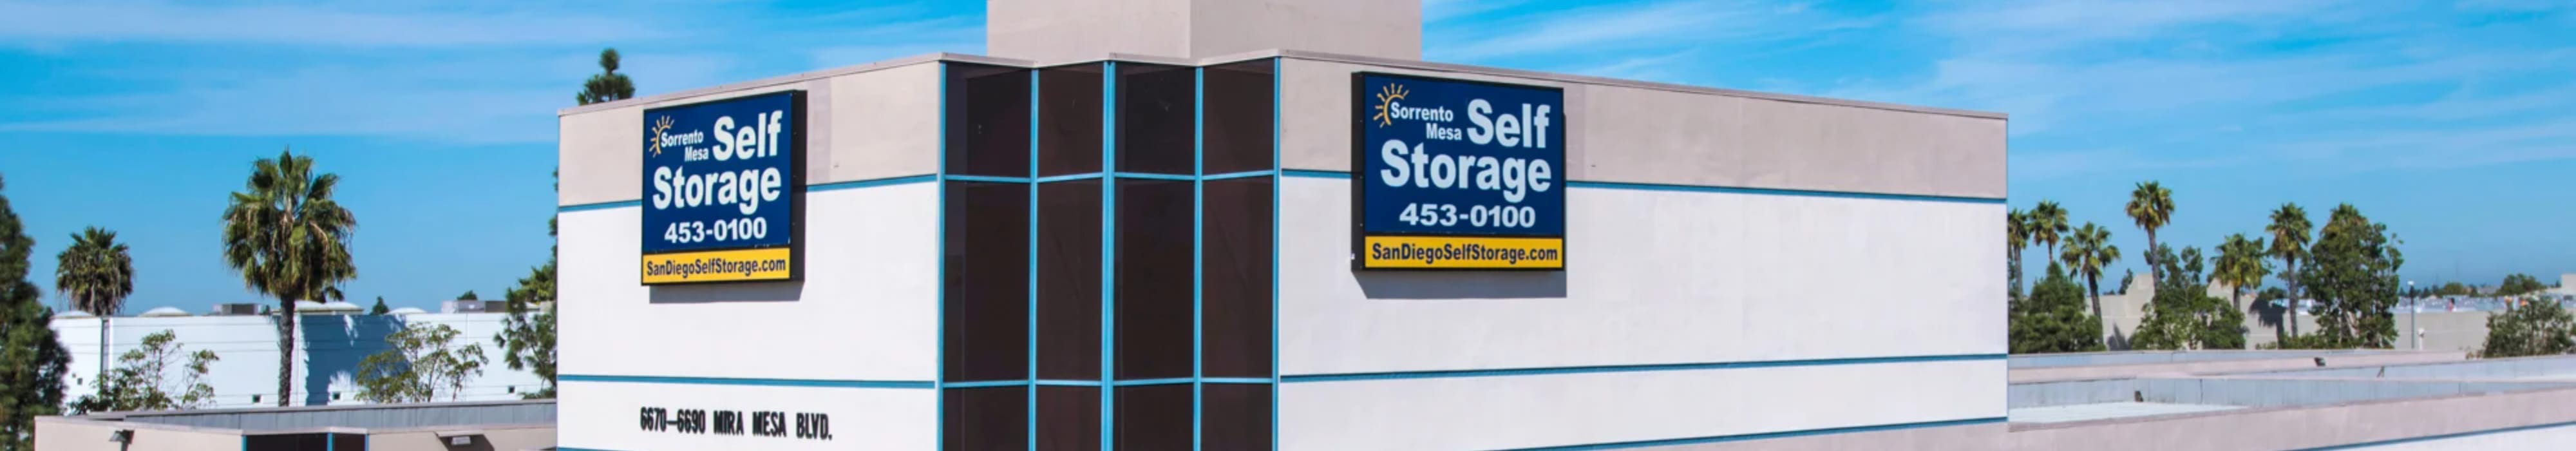 Branding on the exterior of Sorrento Mesa Self Storage in San Diego, California